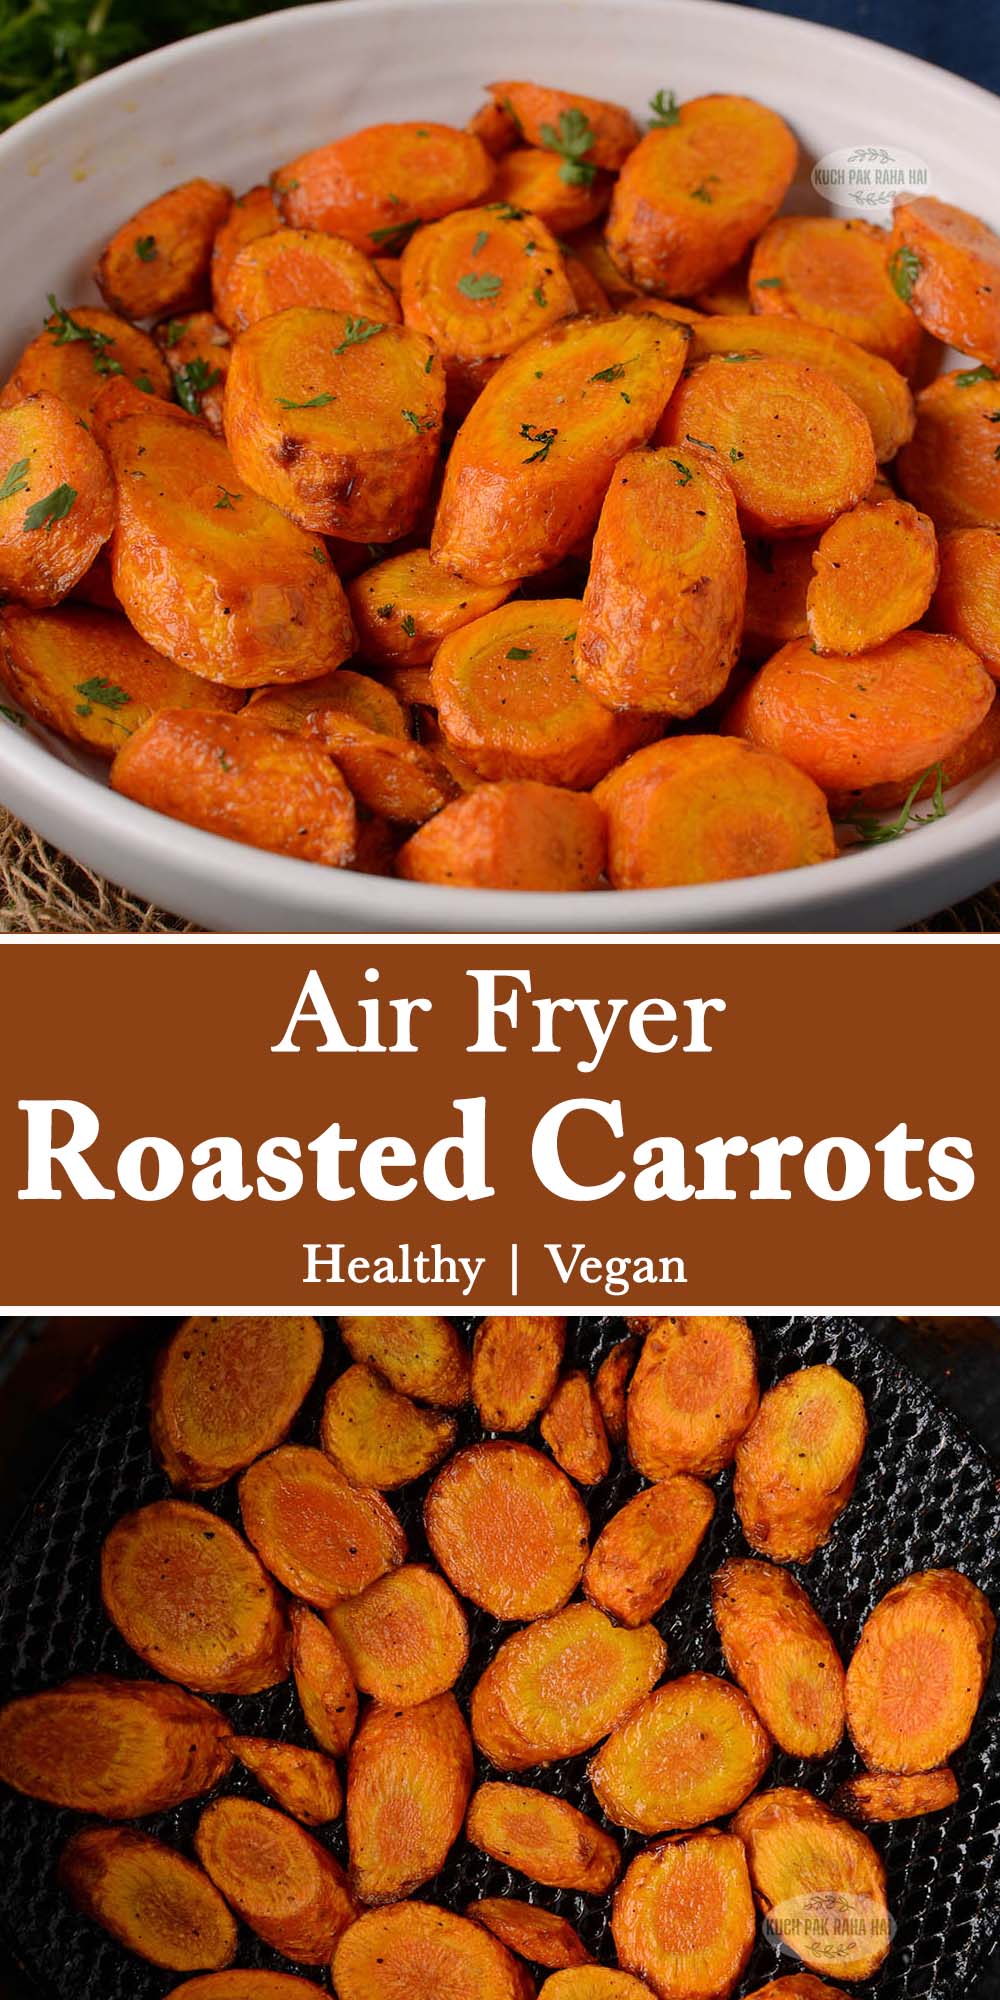 Air fryer carrots healthy recipe.